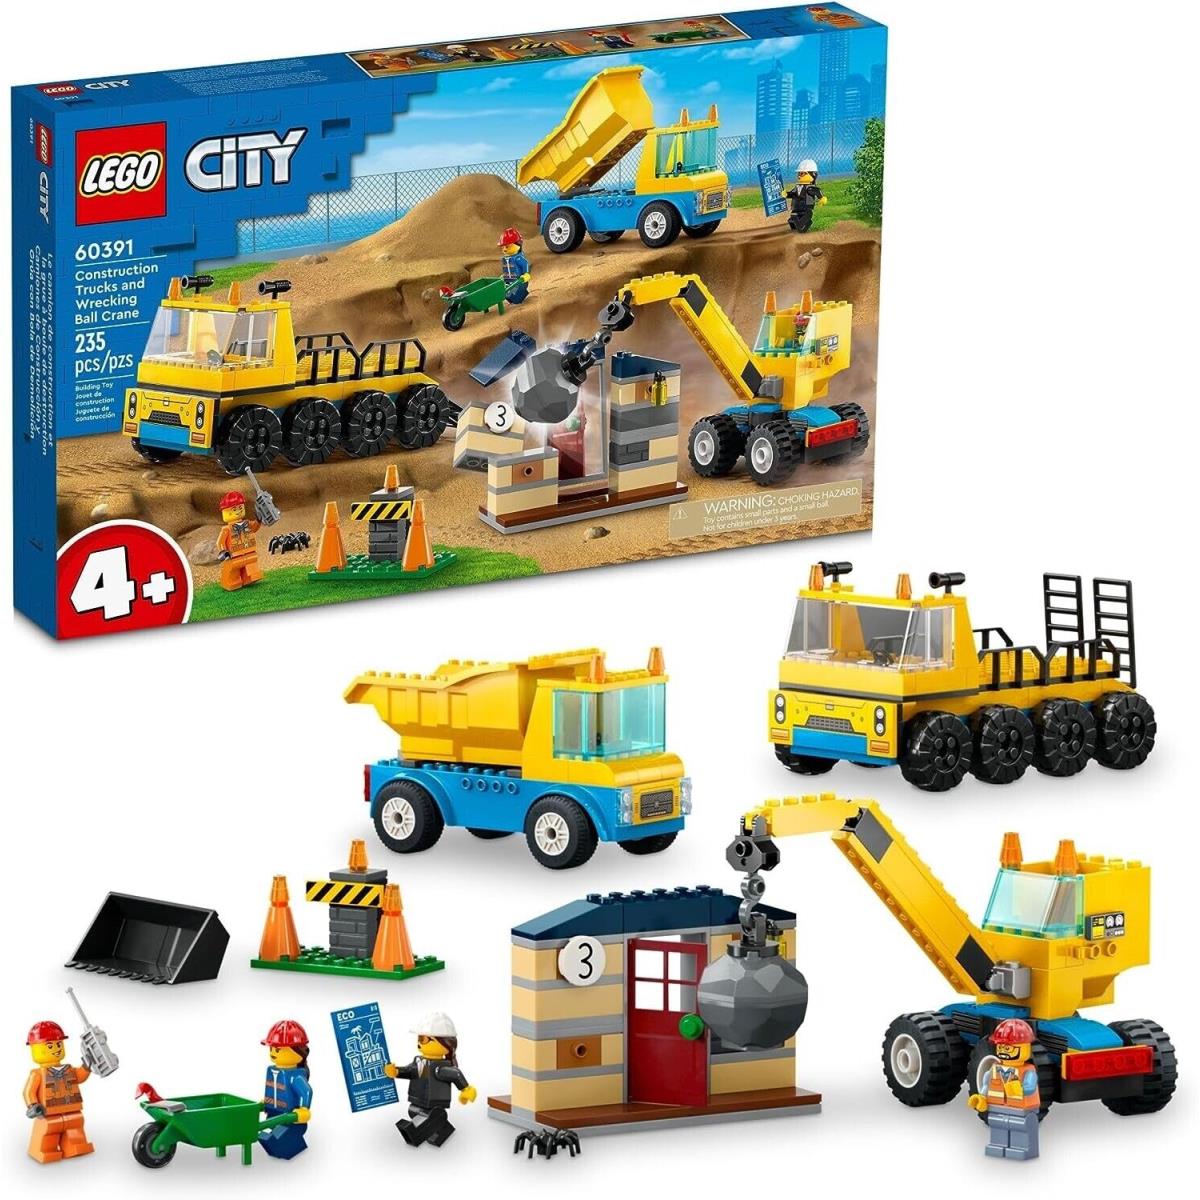 Lego City Construction Trucks Wrecking Ball Crane 60391 Box Not Mint B